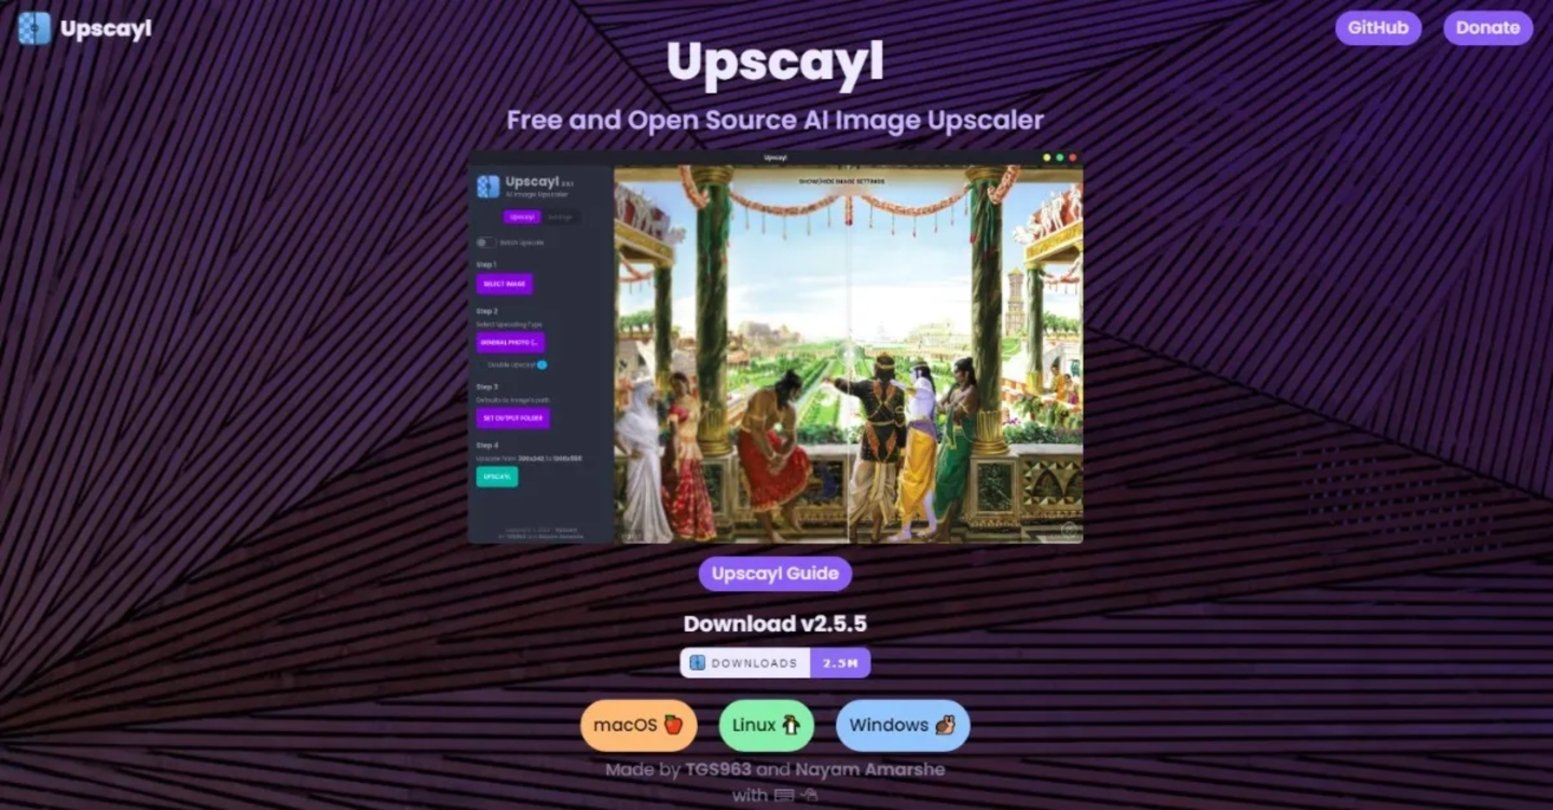 Pantalla de inicio de la app Upscayl.